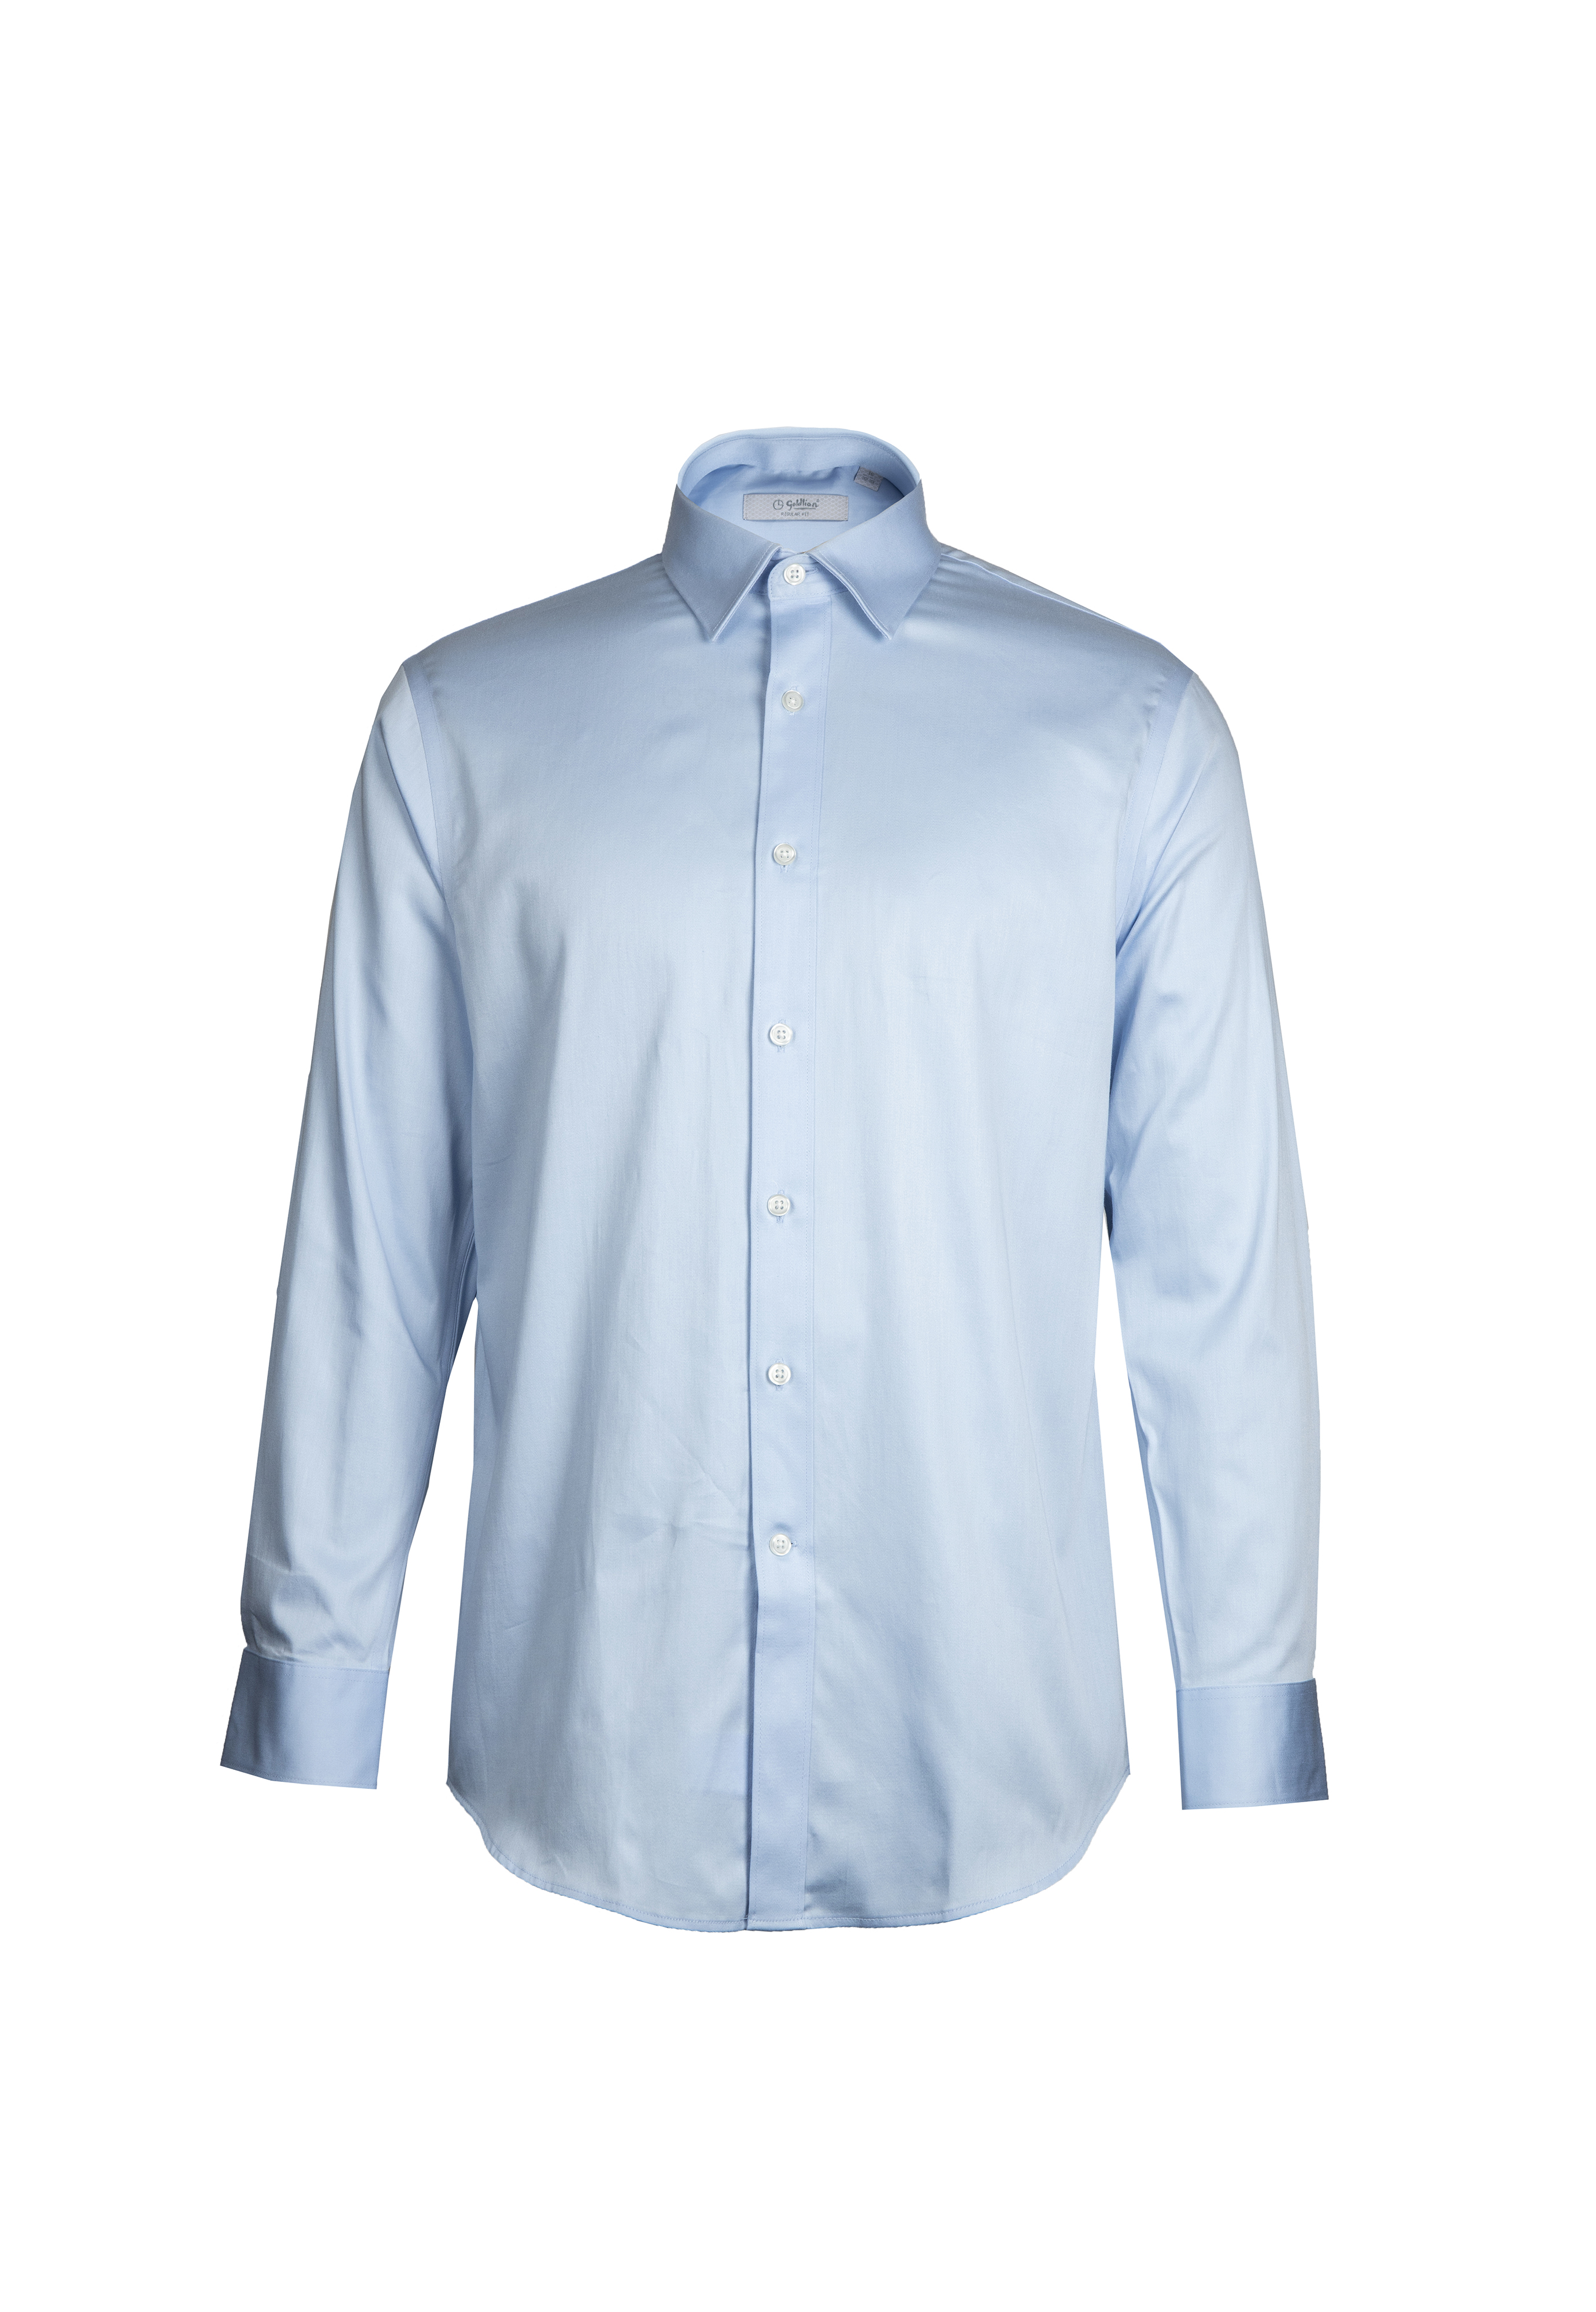 [Online Exclusive] Goldlion Business Regular Fit Long-Sleeved Shirt (Light Blue)